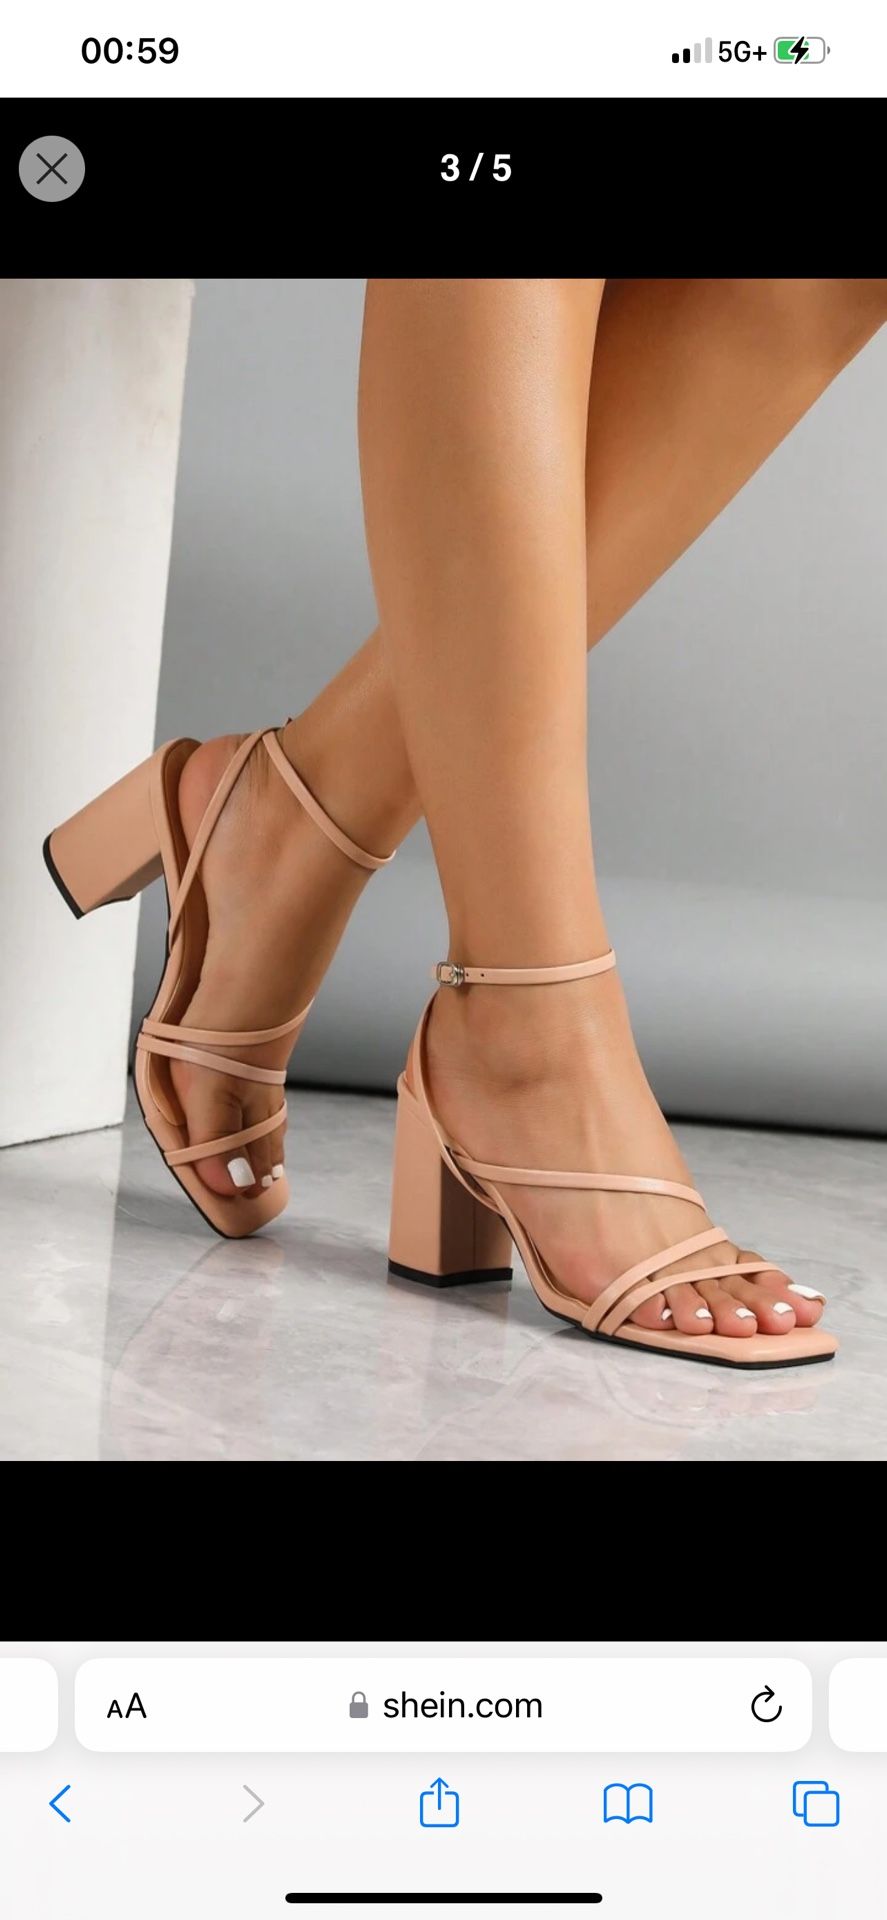 Nude PU High Flat Heel Square Toe Multi Strap Sandals size 8